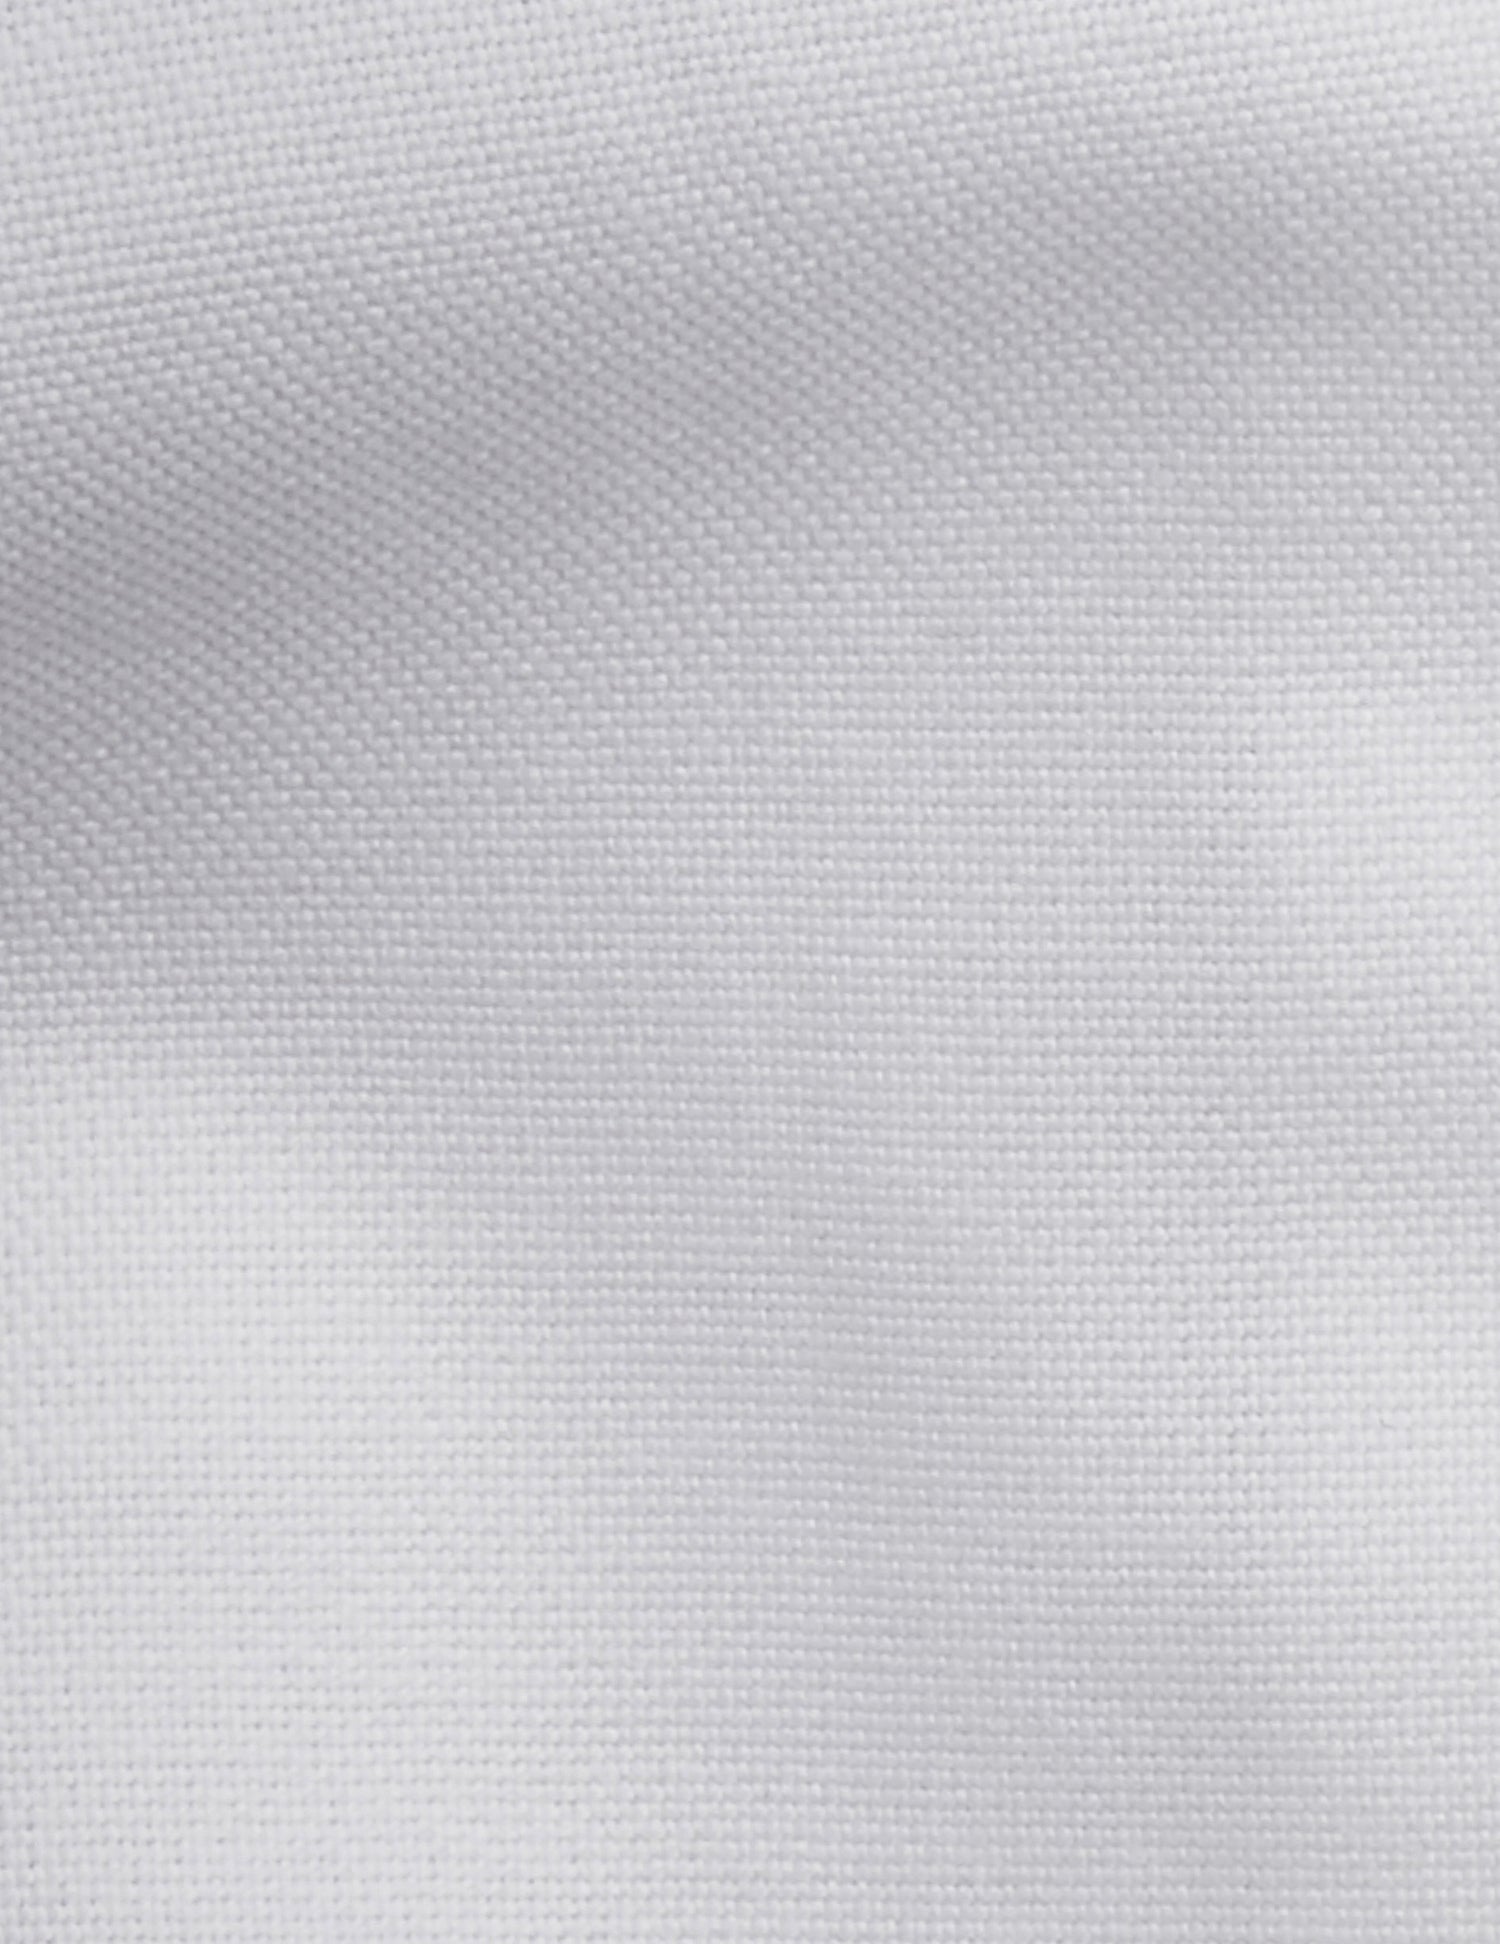 White Herwin shirt - Oxford - Officer Collar#5